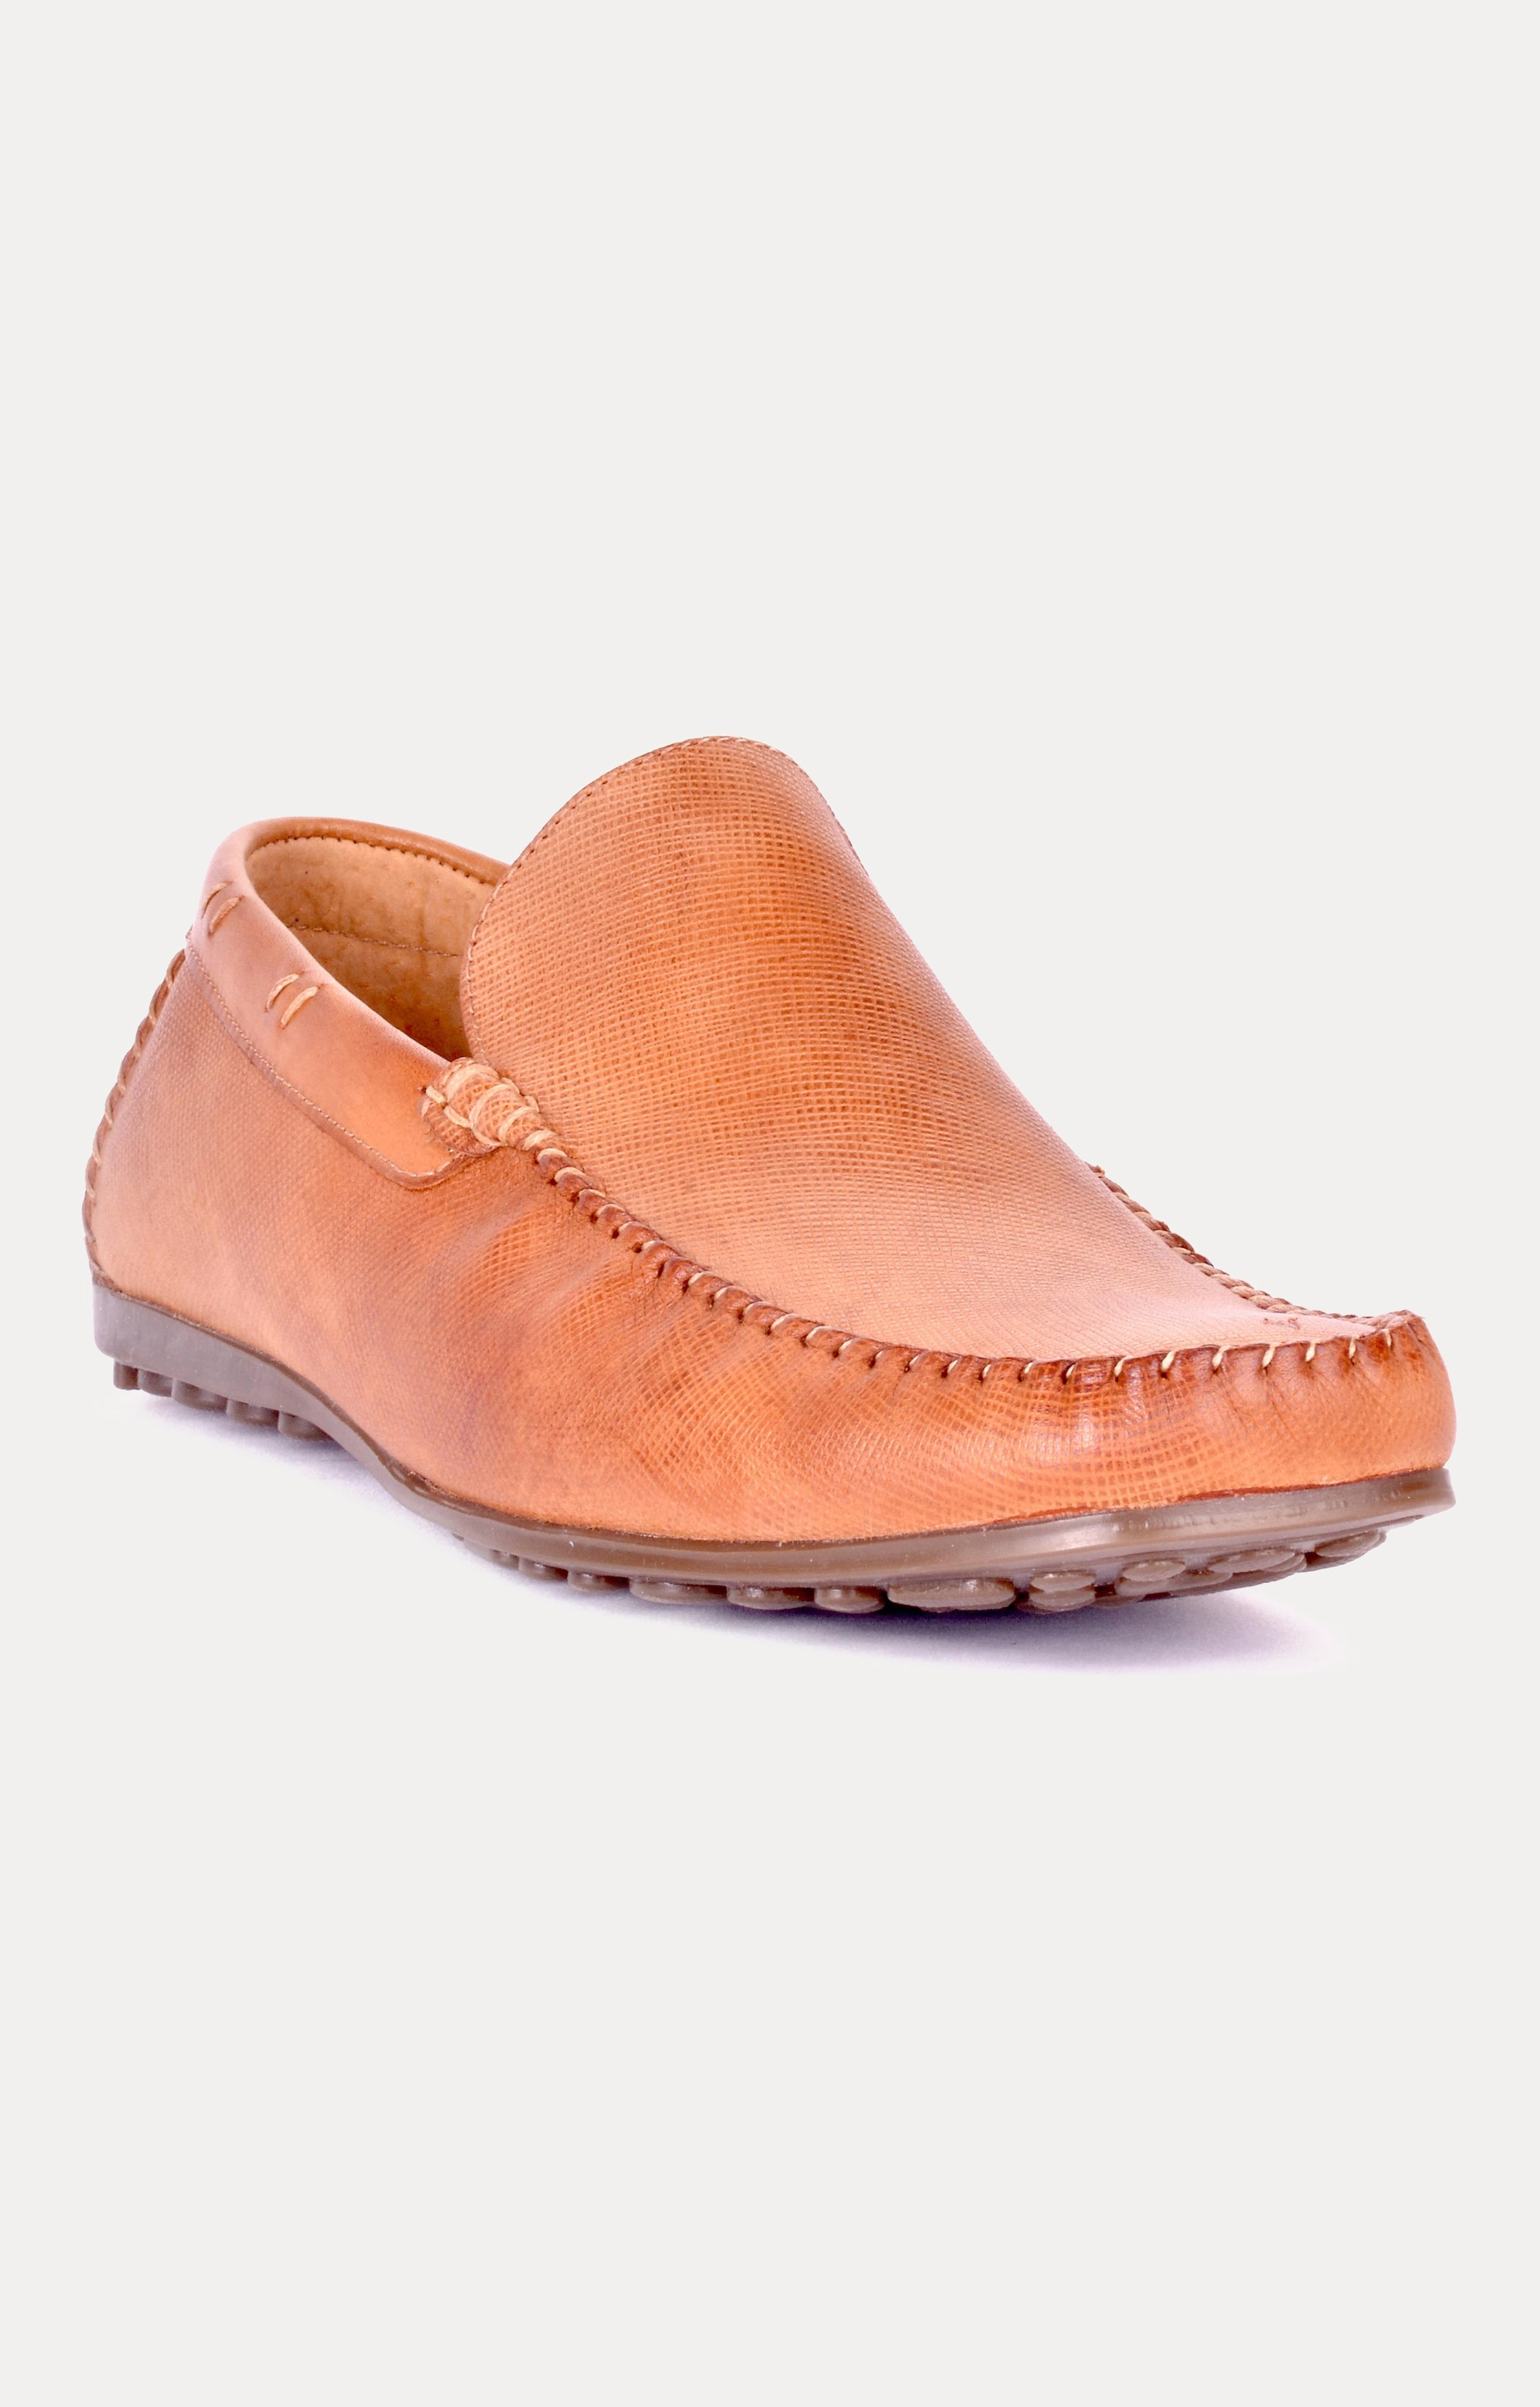 Perkens Brown Boat Shoes